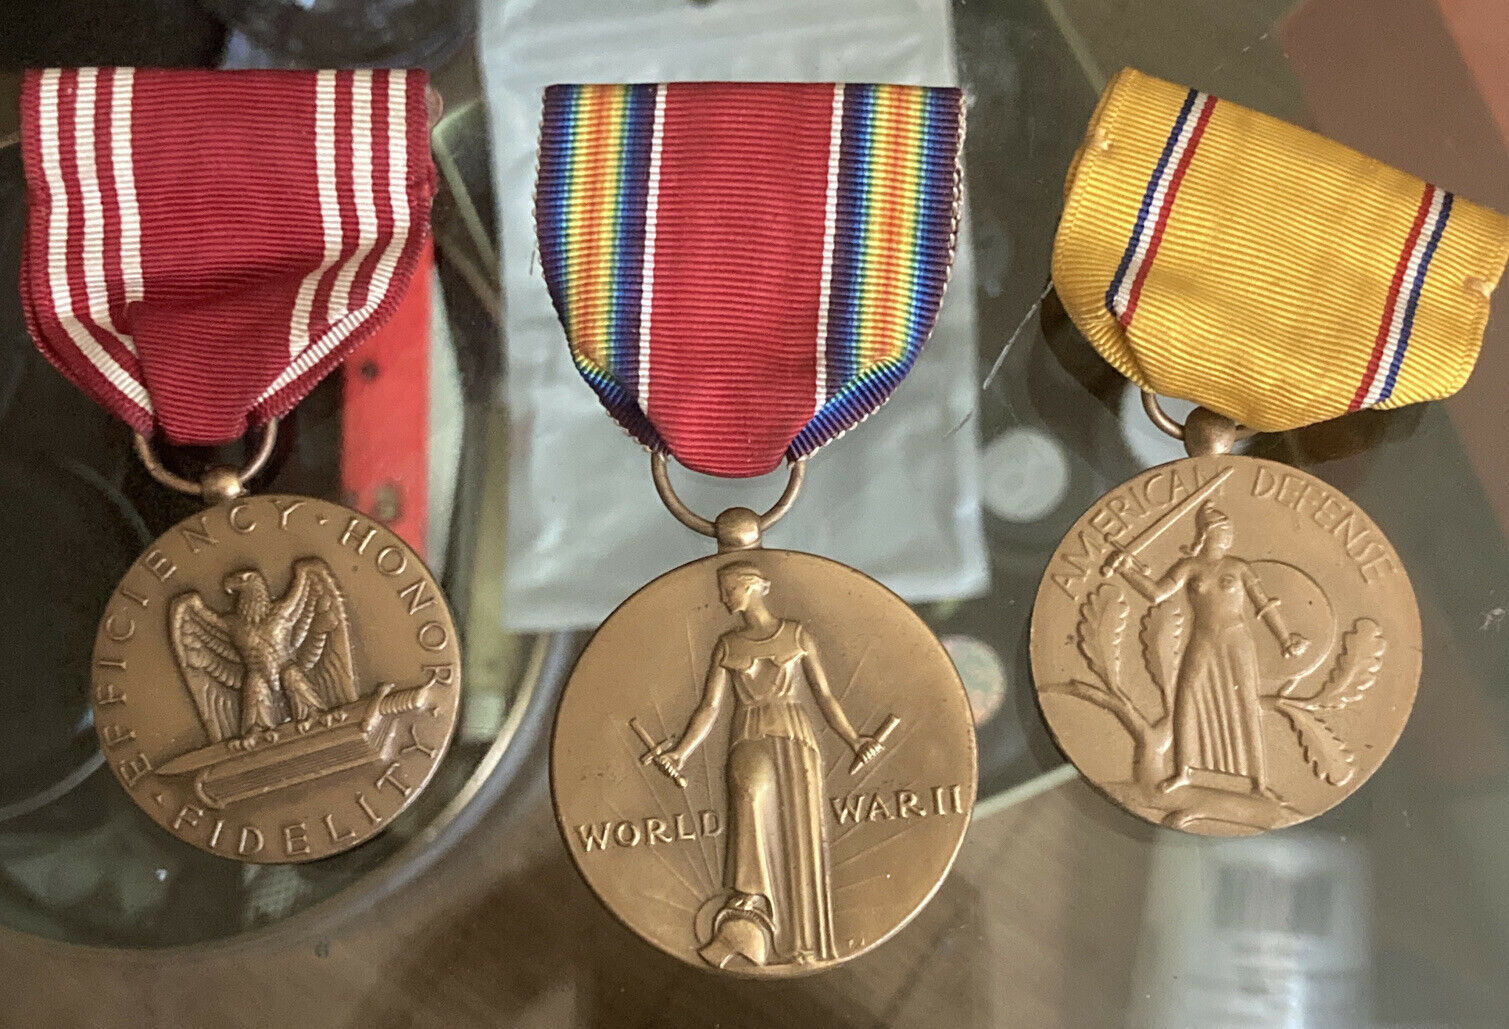 3 world war 2 medals, wwII, good conduct, defense